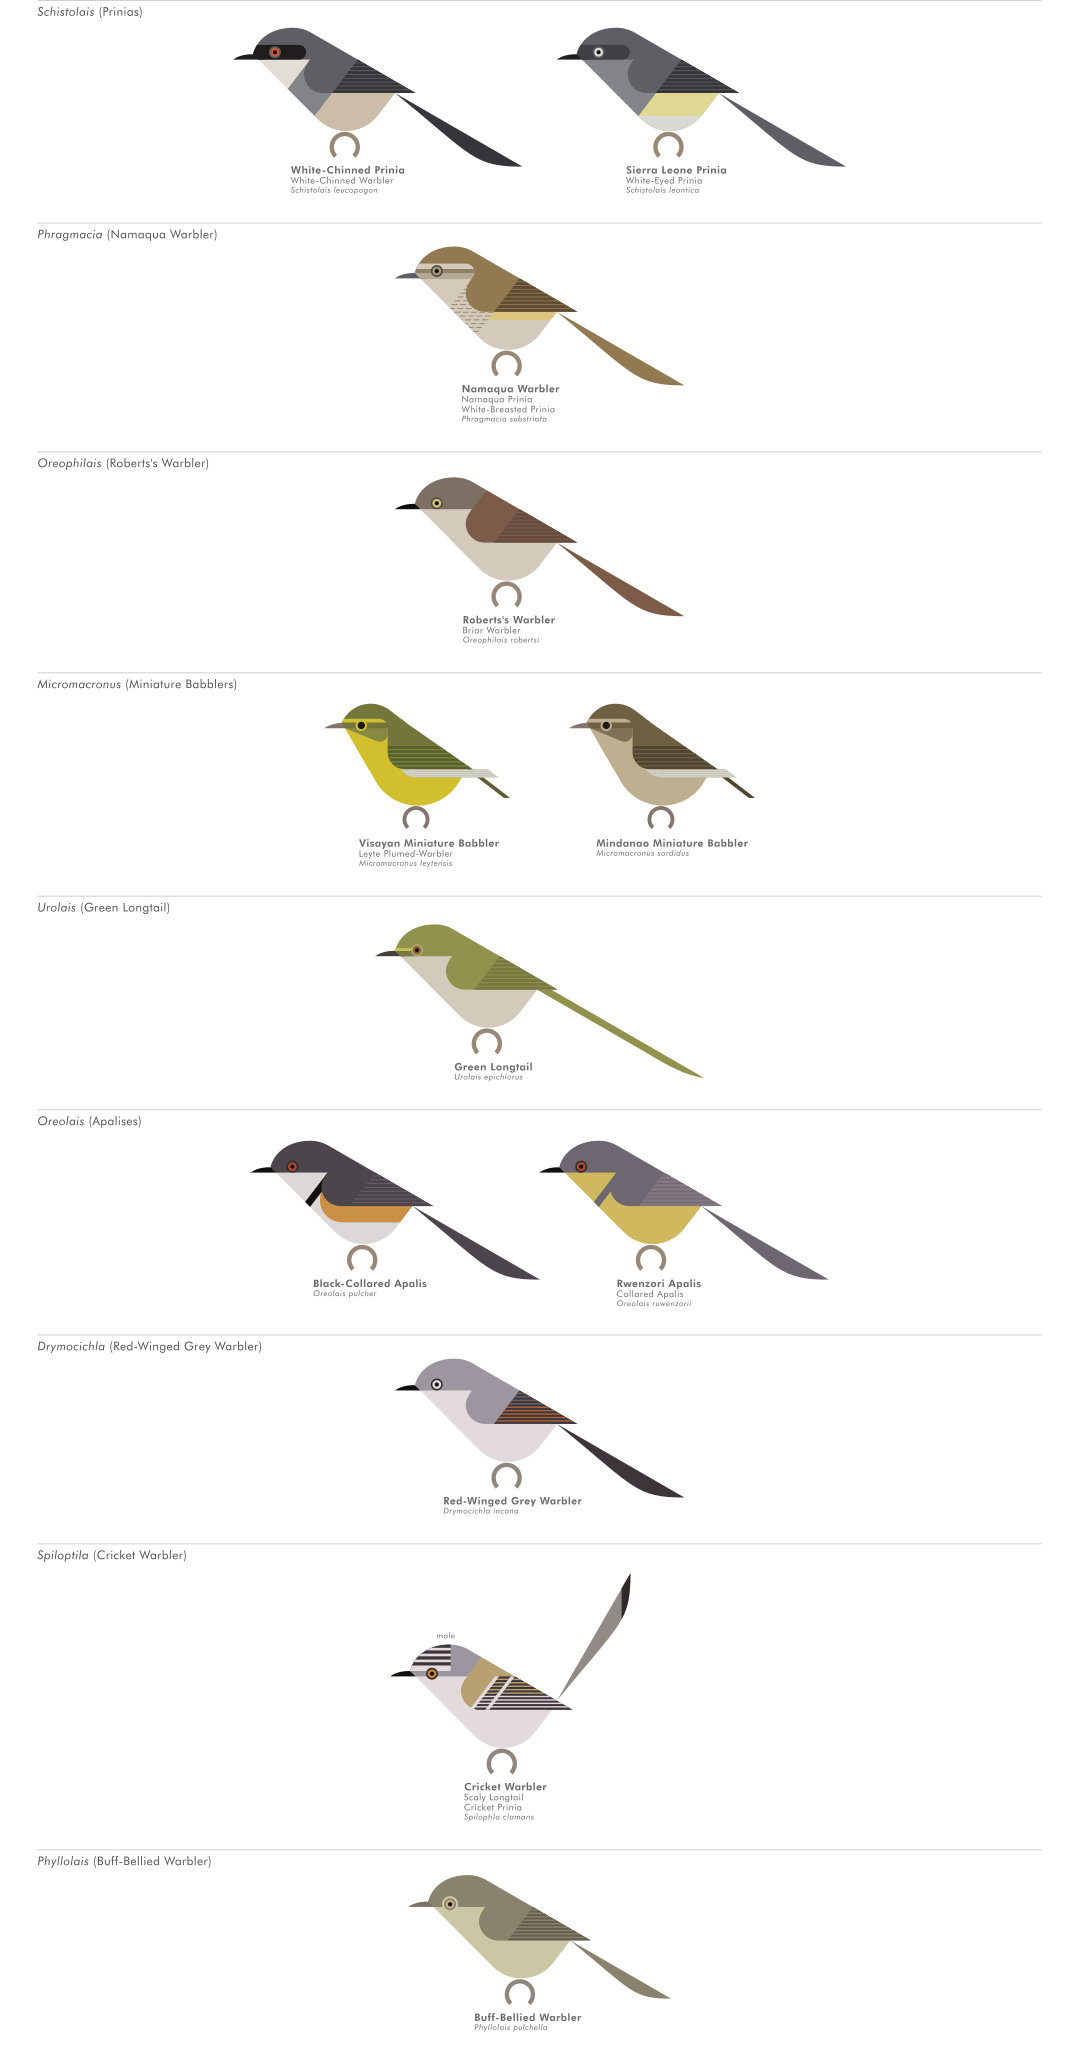 scott partridge - AVE - avian vector encyclopedia - prinias etc - bird vector art